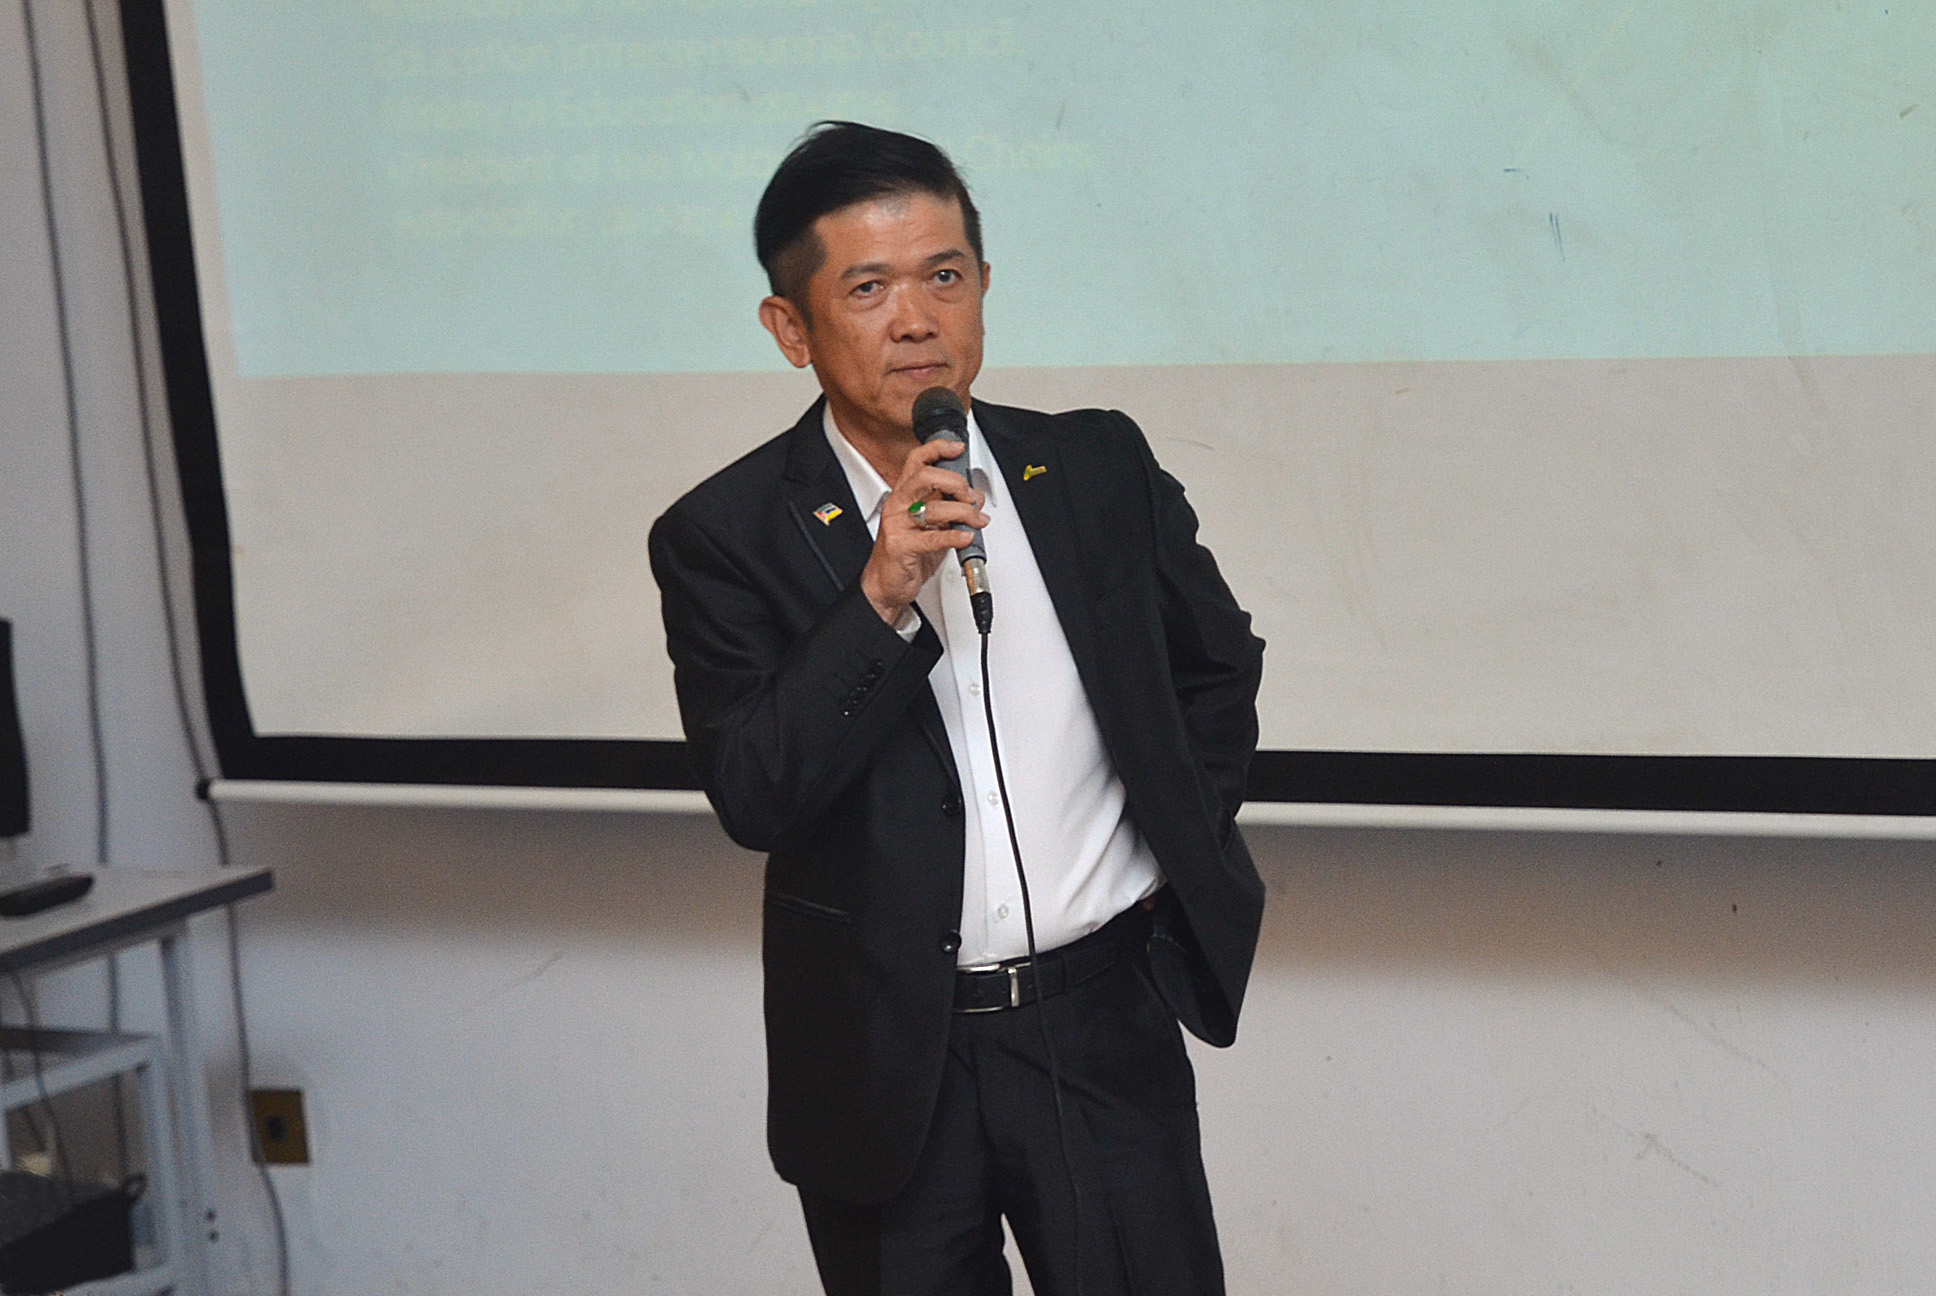 Datuk Seri Kwok advising students on how to be good entrepreneurs